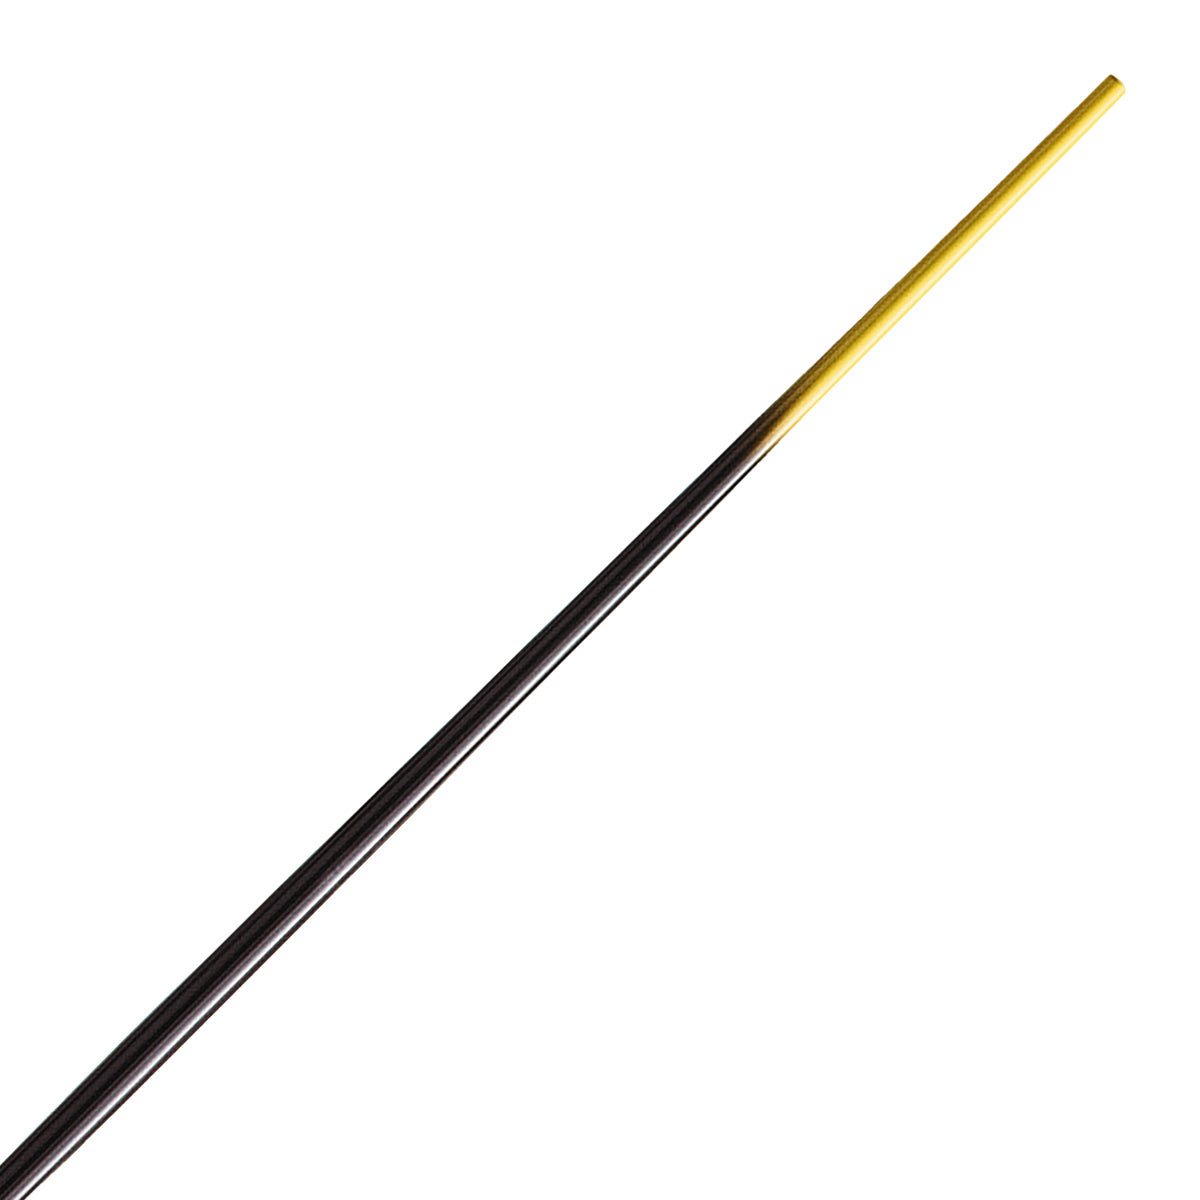 Collapsible Graphite Bo Staff Yellow/Black